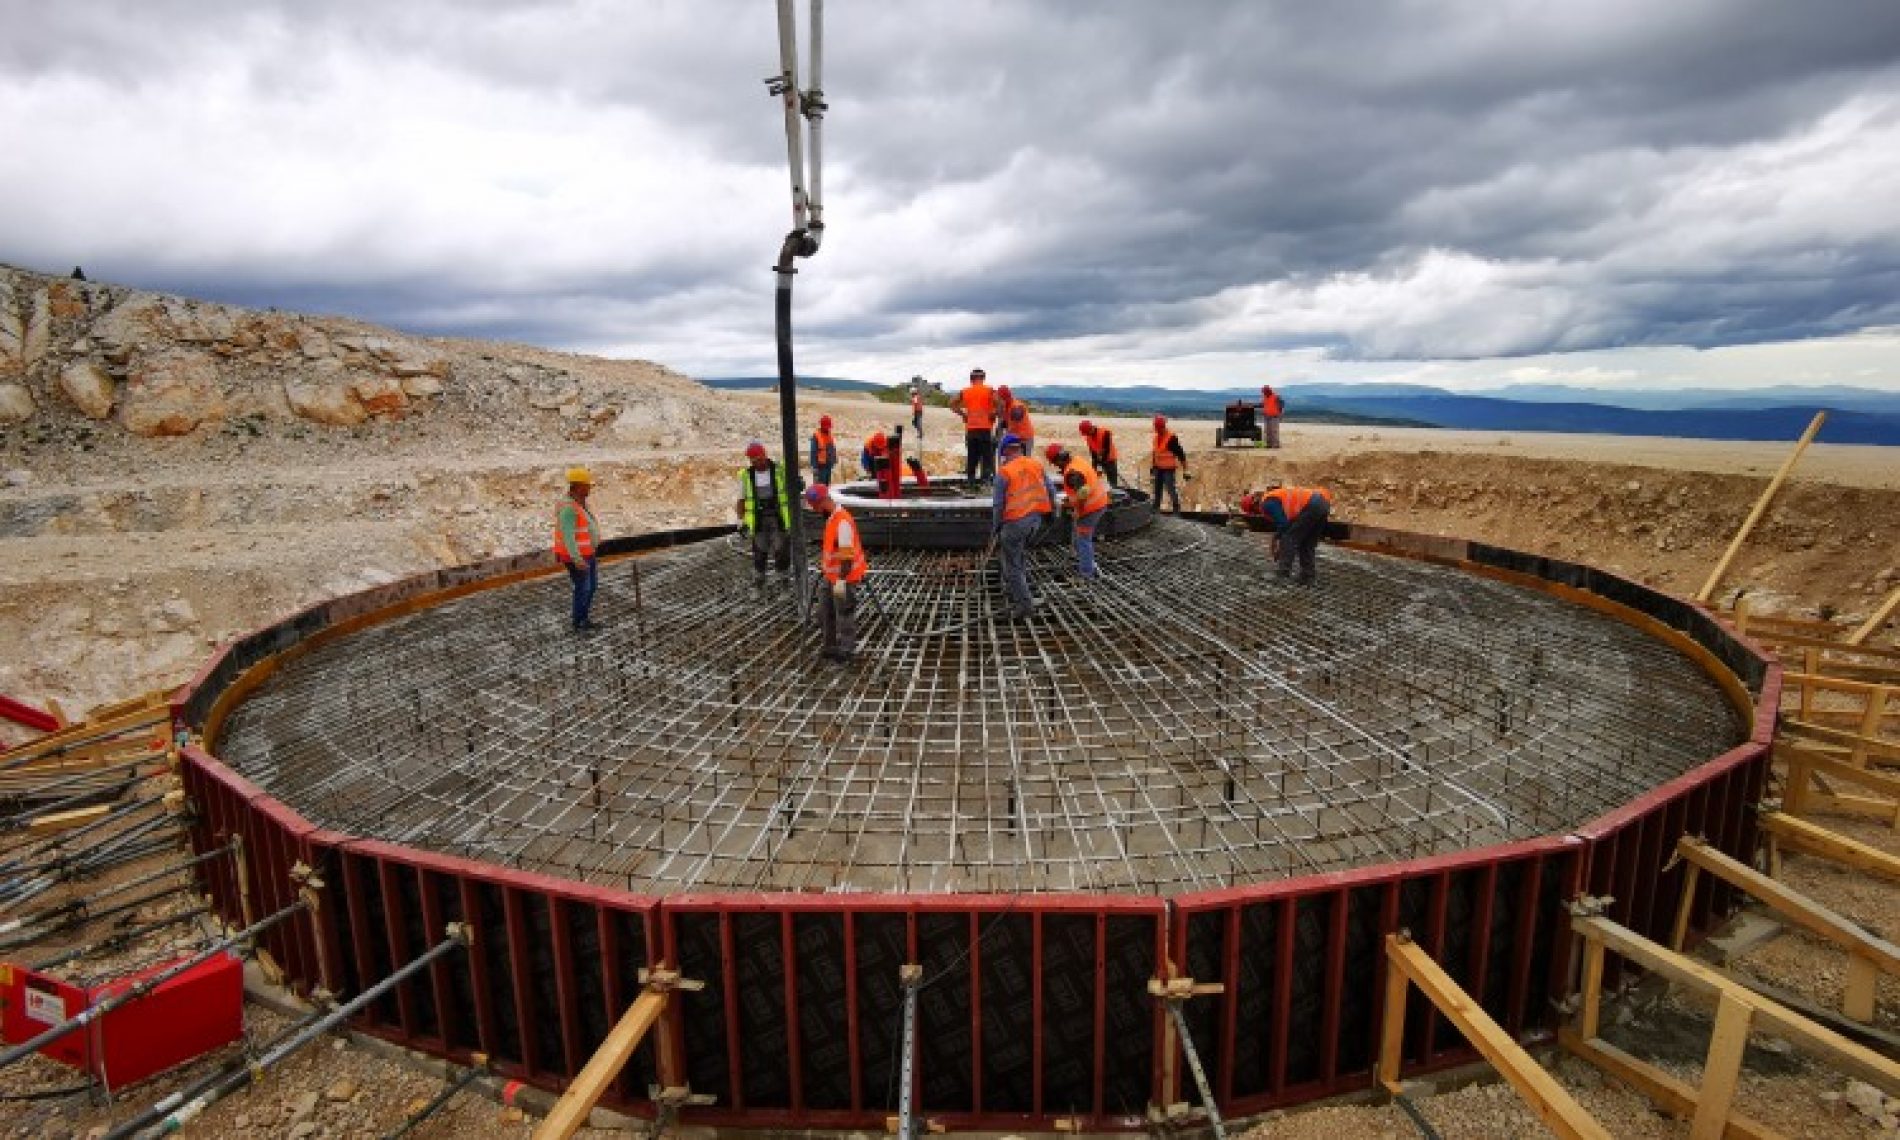 Vjetroelektrana Podveležje – betoniran prvi temelj; počela isporuka opreme